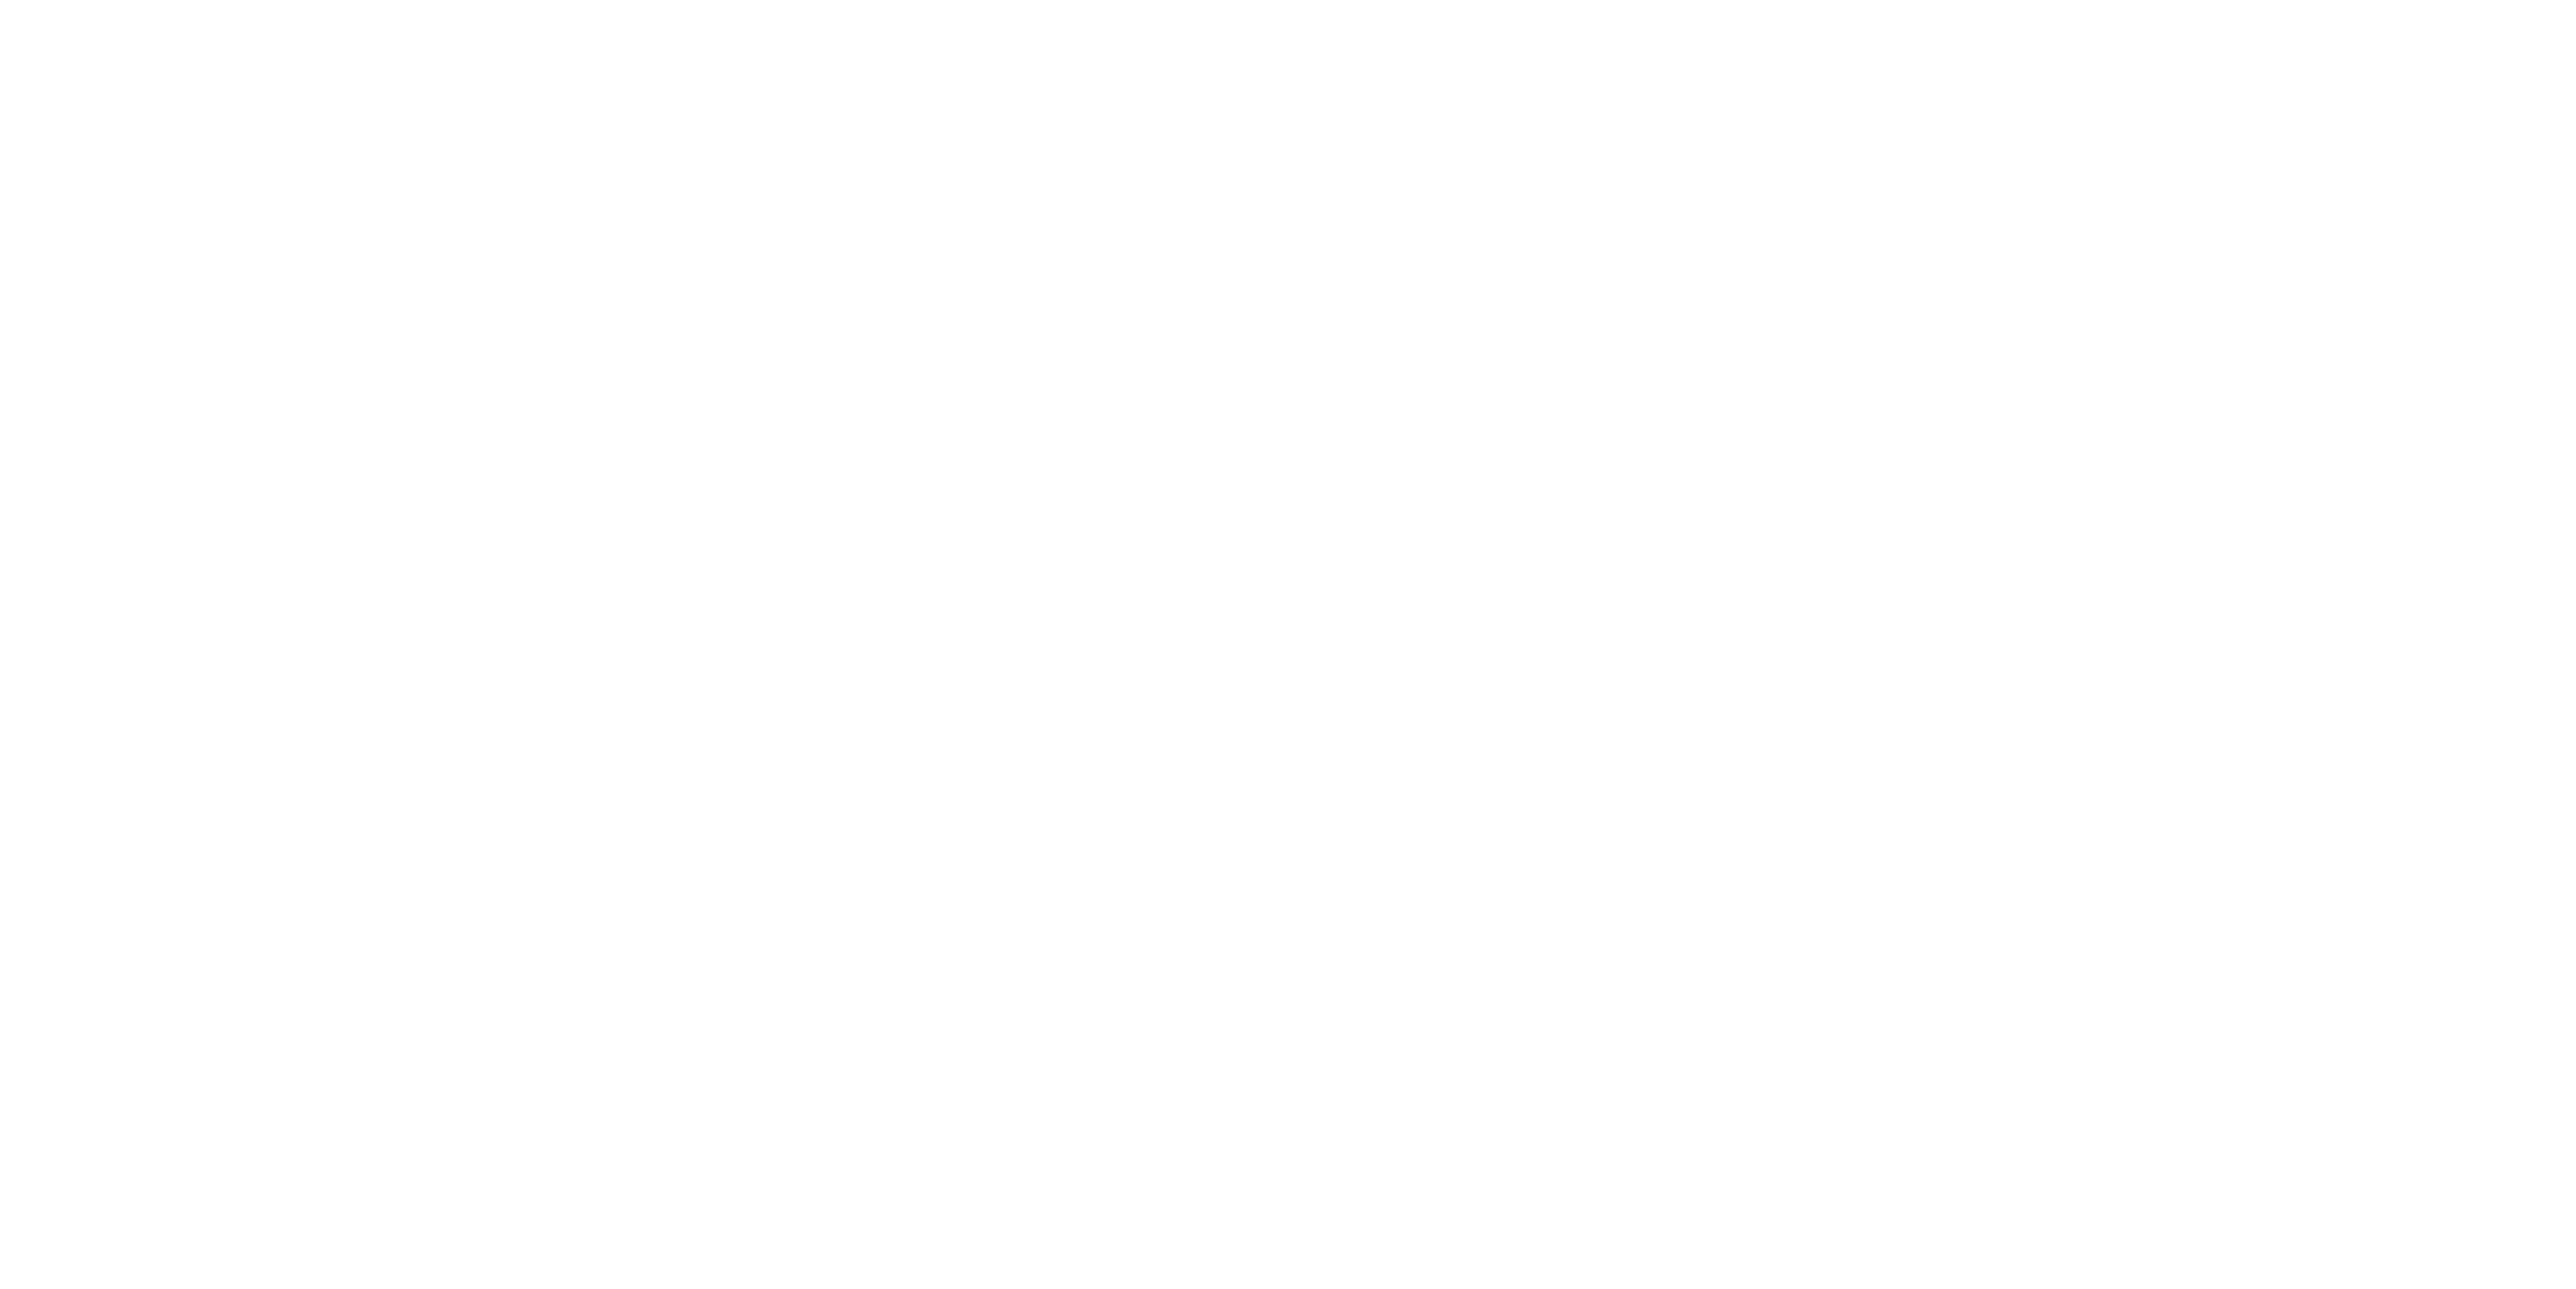 Quantum leap capital logo white